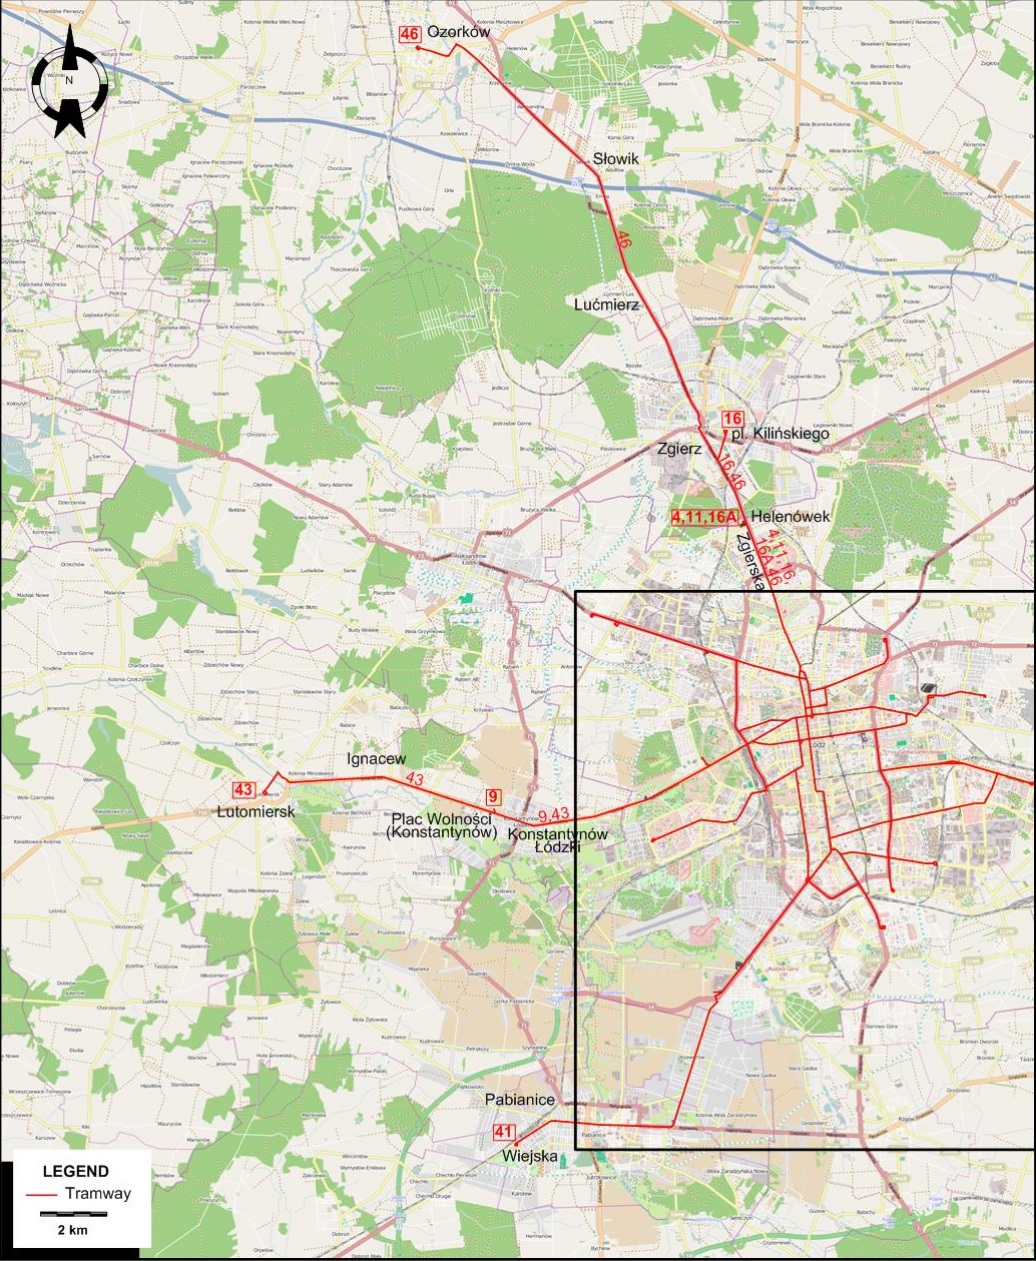 Lodz tram map 2014